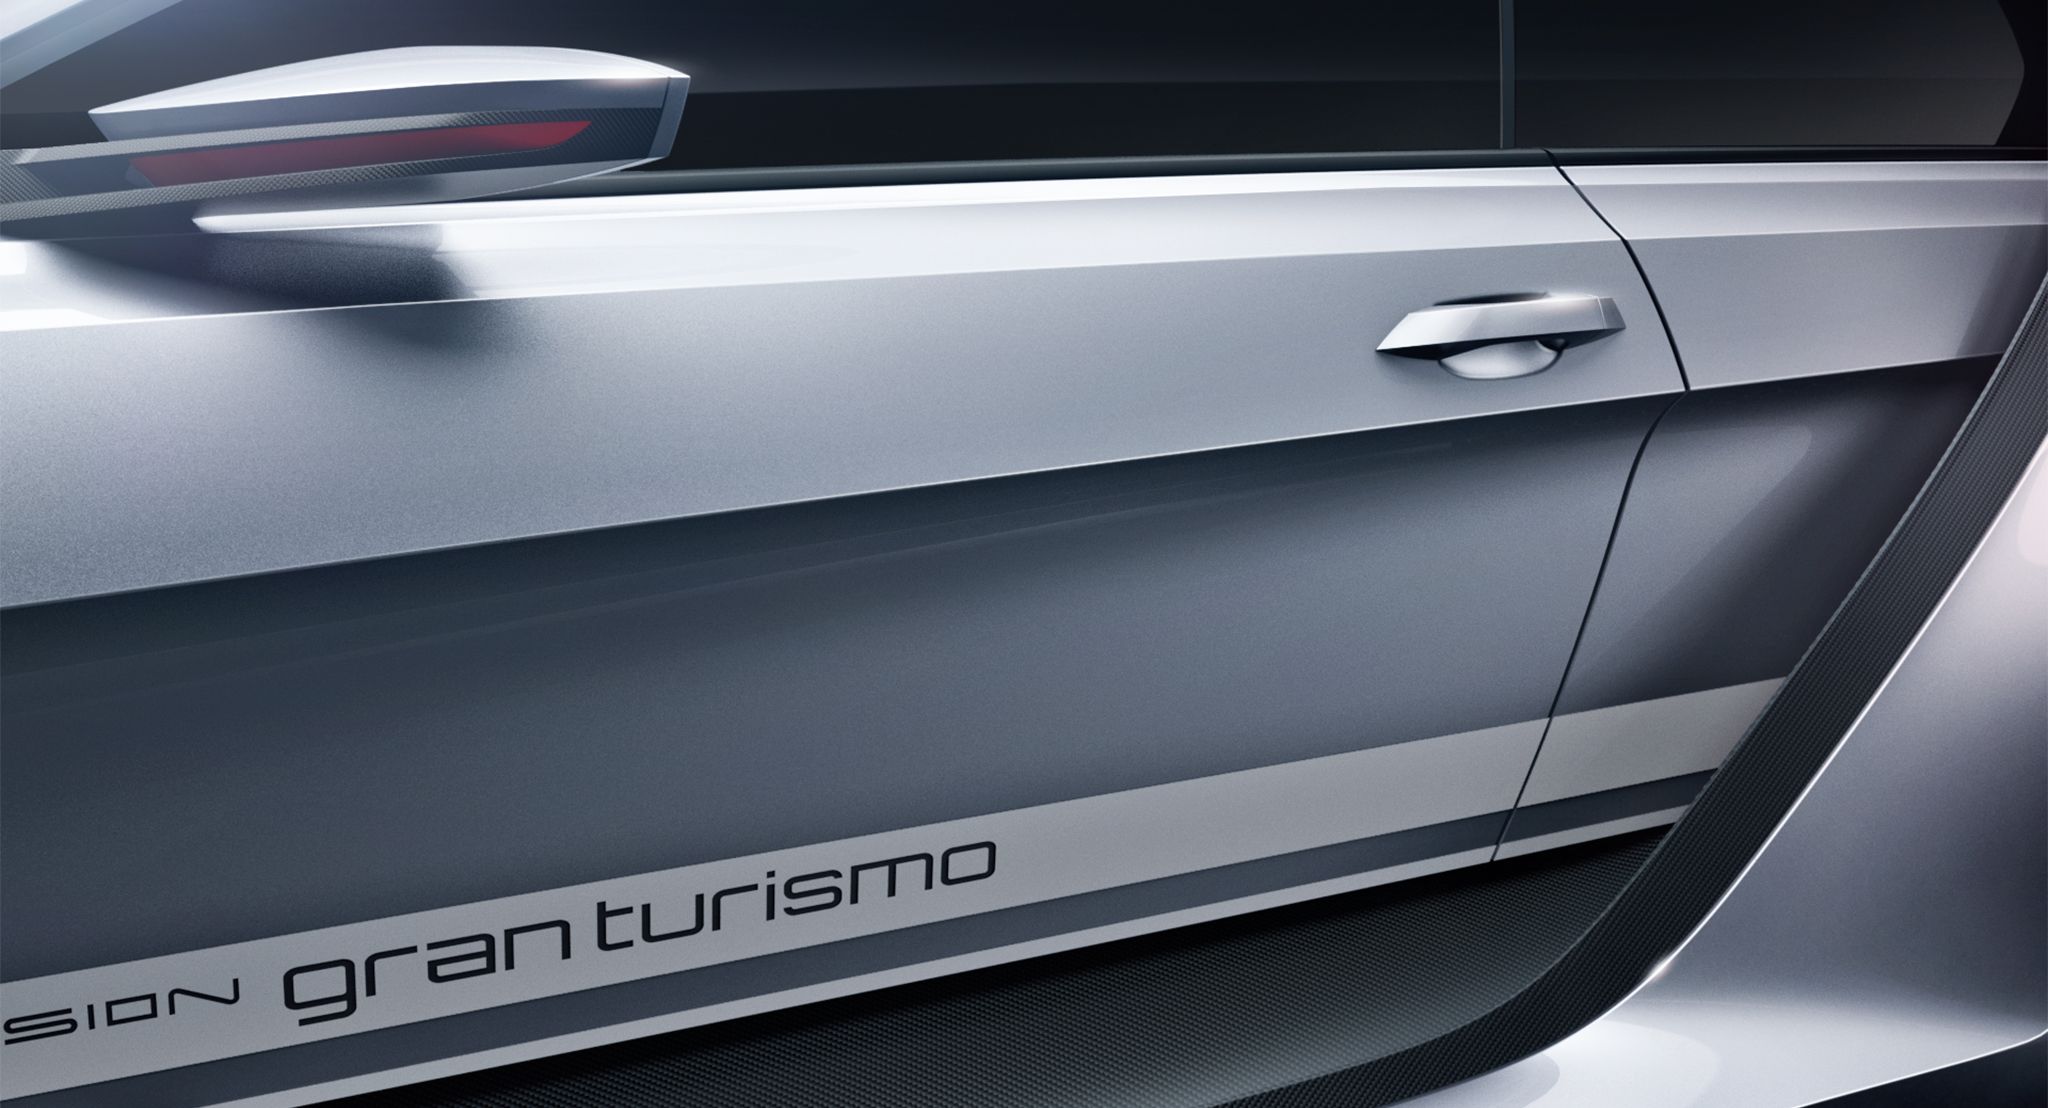 2015 Volkswagen GTI Supersport Vision Gran Turismo